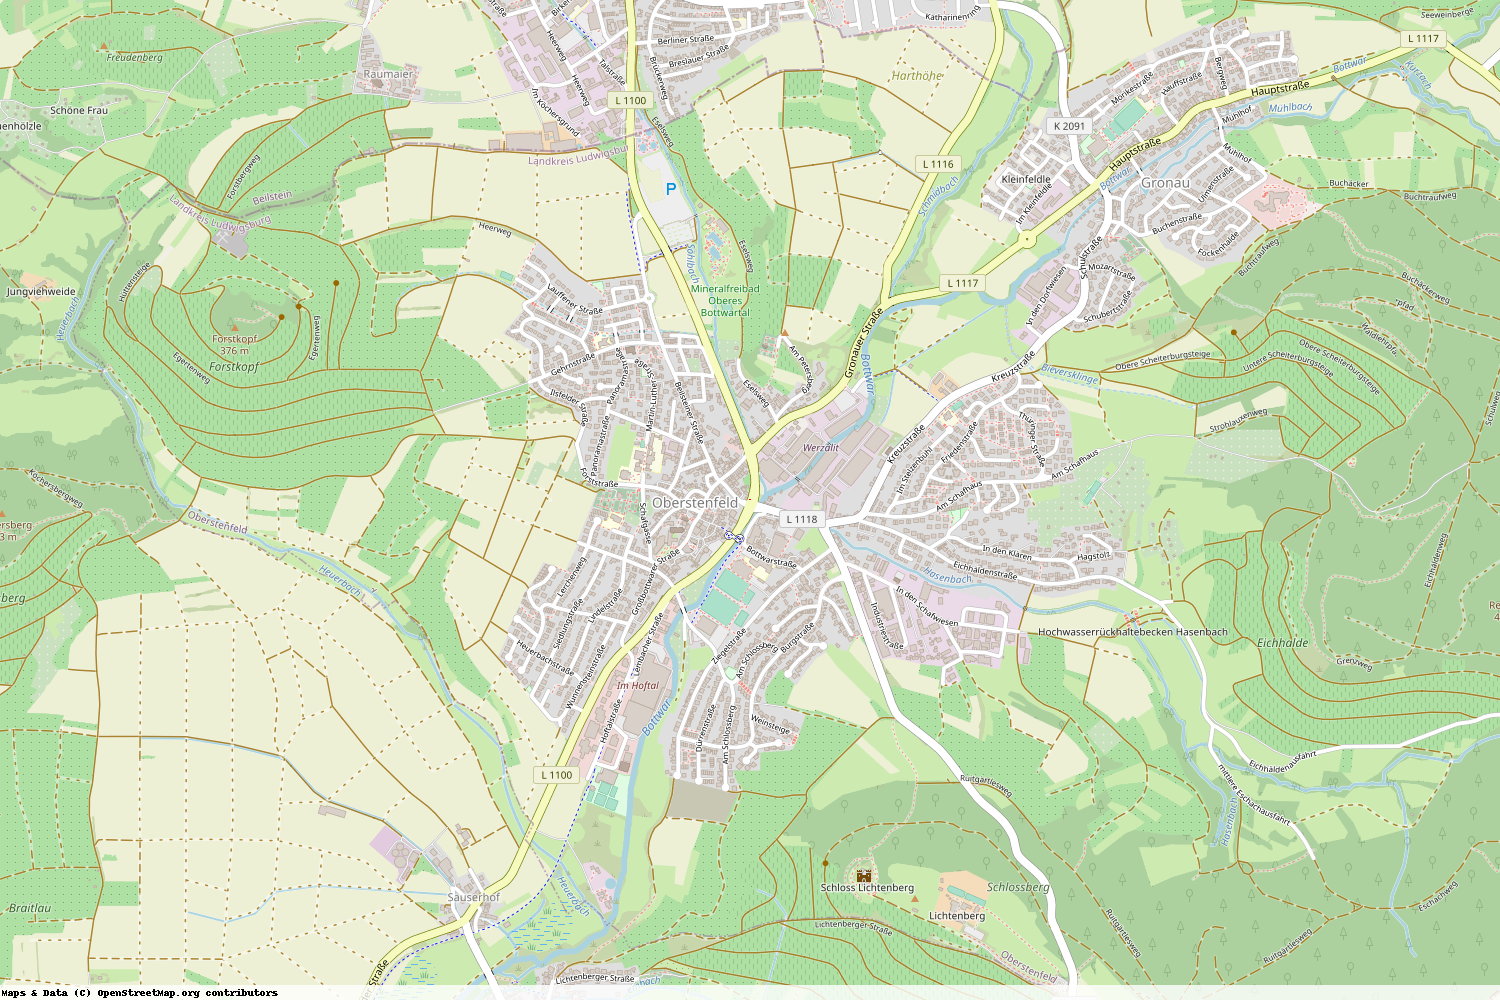 Ist gerade Stromausfall in Baden-Württemberg - Ludwigsburg - Oberstenfeld?